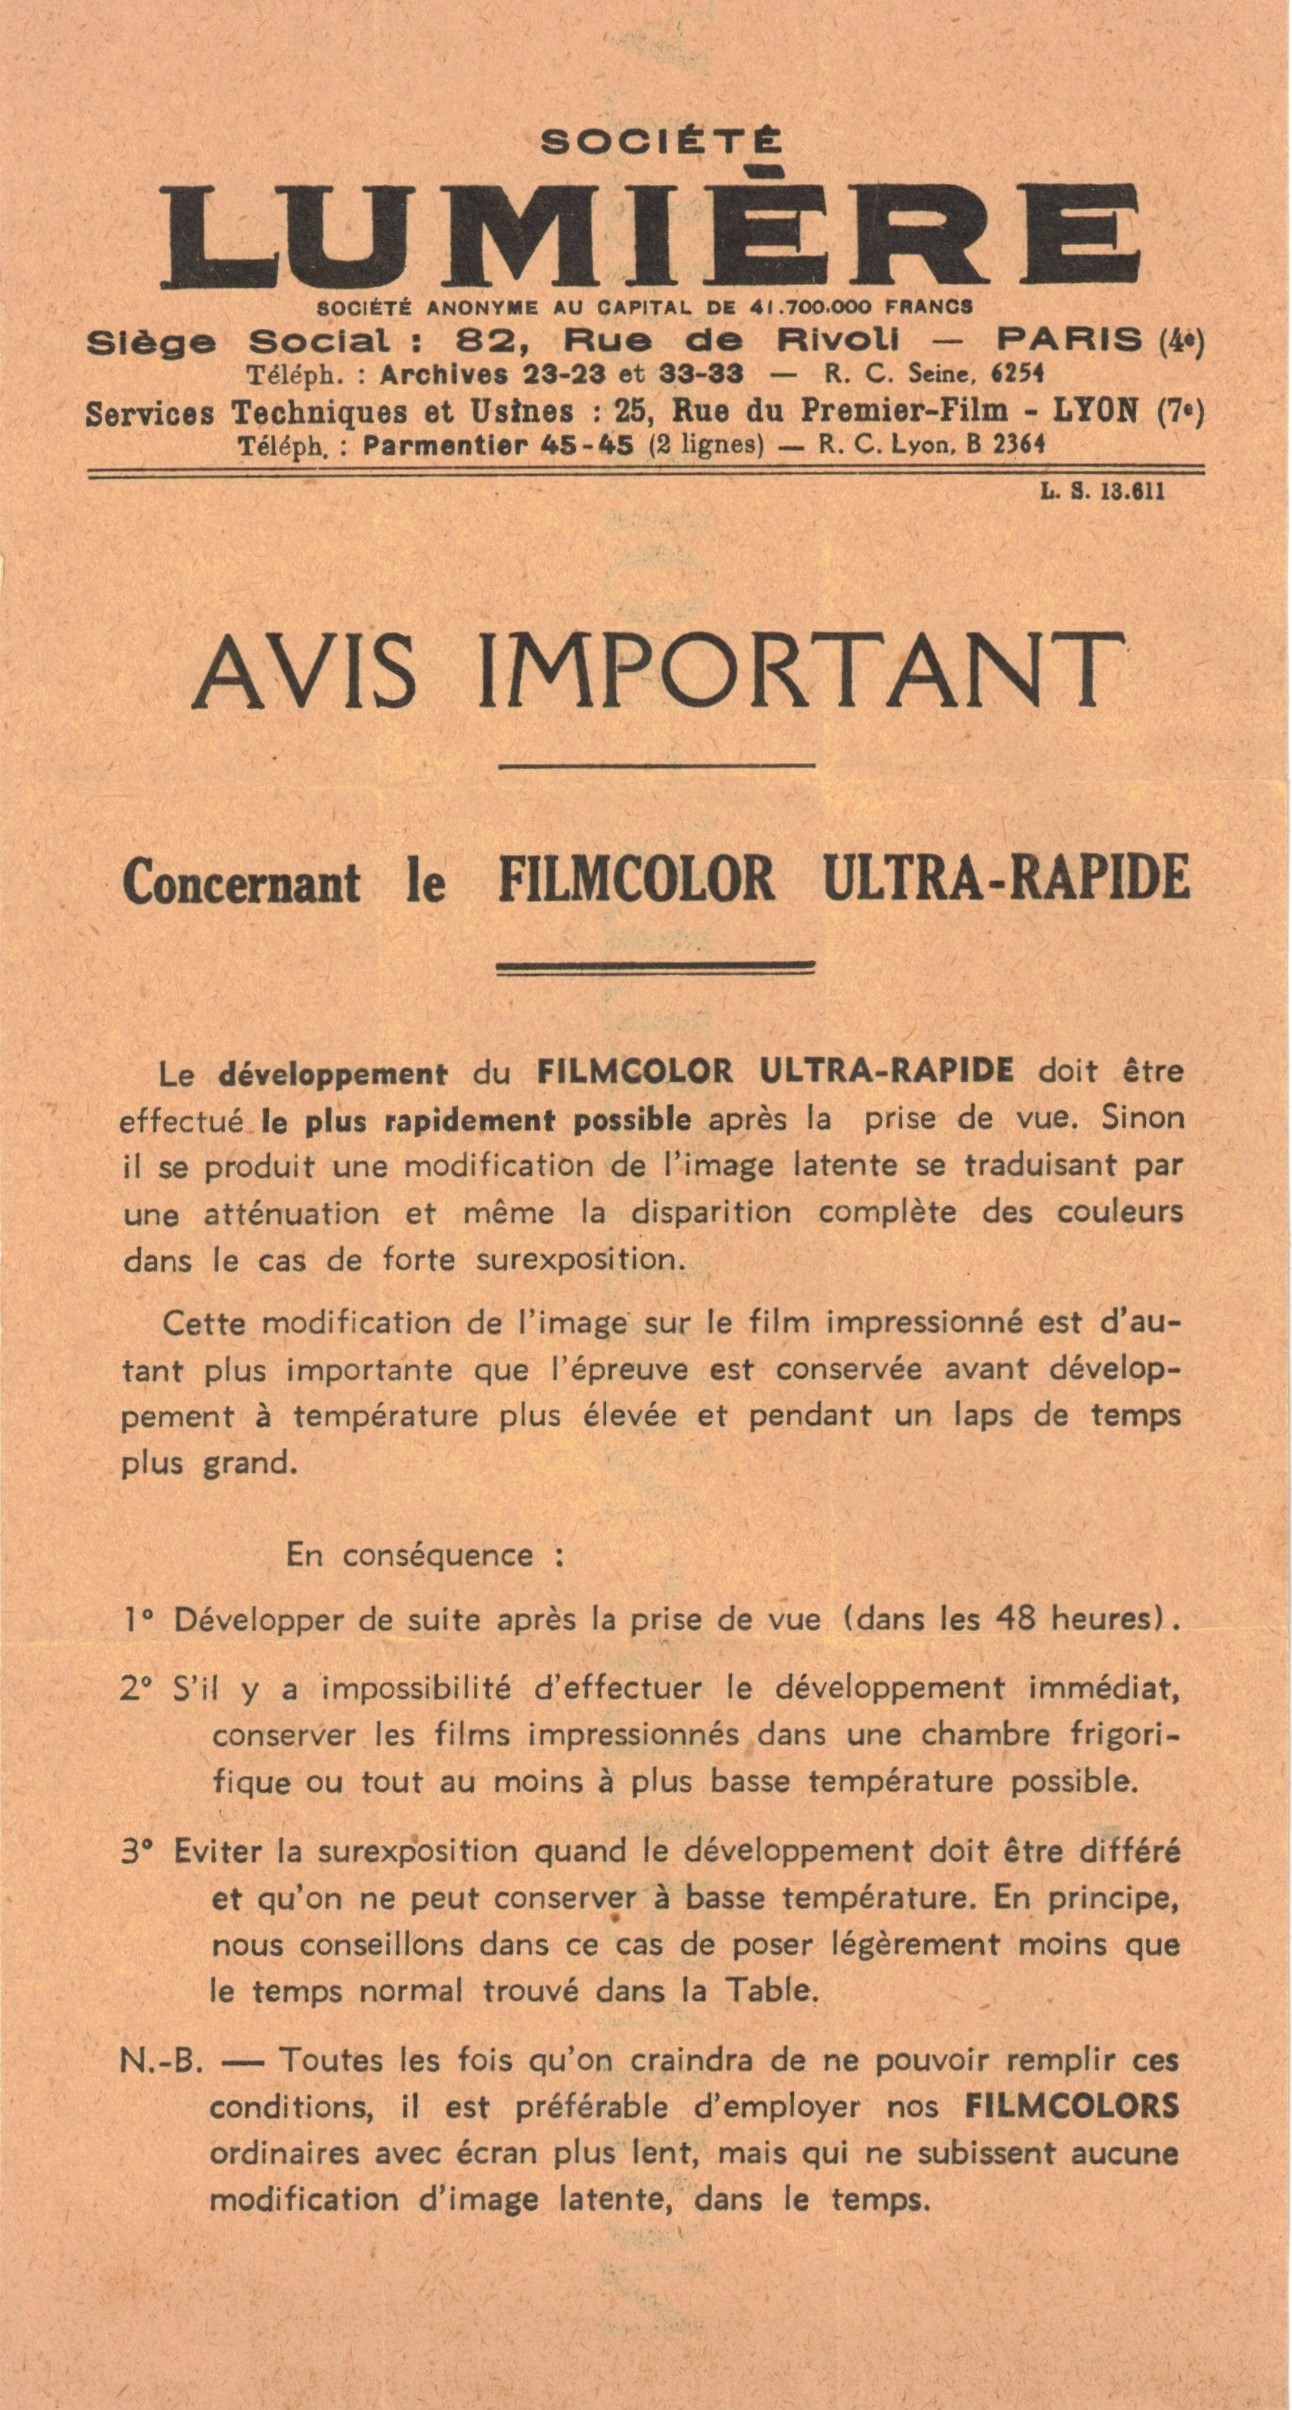 1933 - Avis important concernant le Filmcolor ultra-rapide - recto